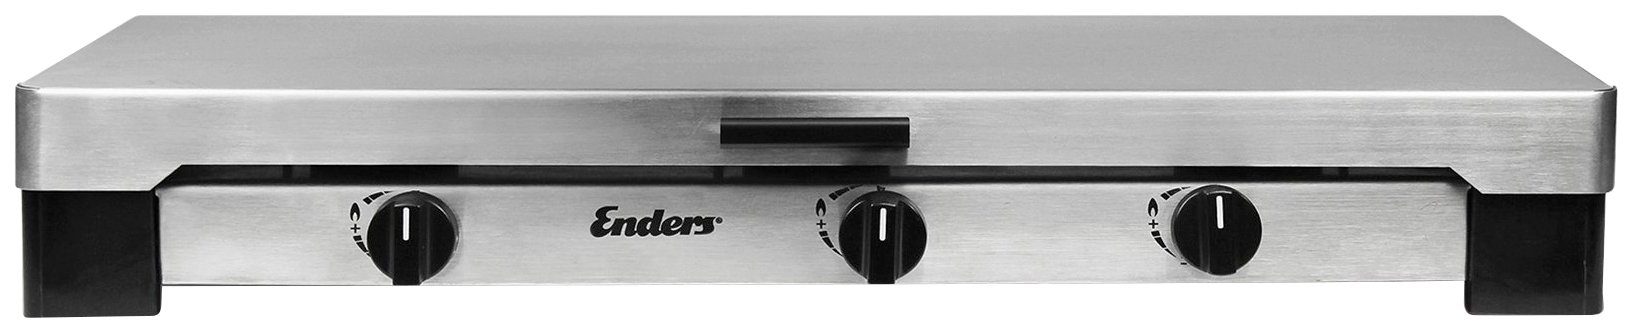 Enders® Gaskocher cm, x Brisbane 59x32x9 BxLxH: 3 2,3 3 Brenner Z, kW